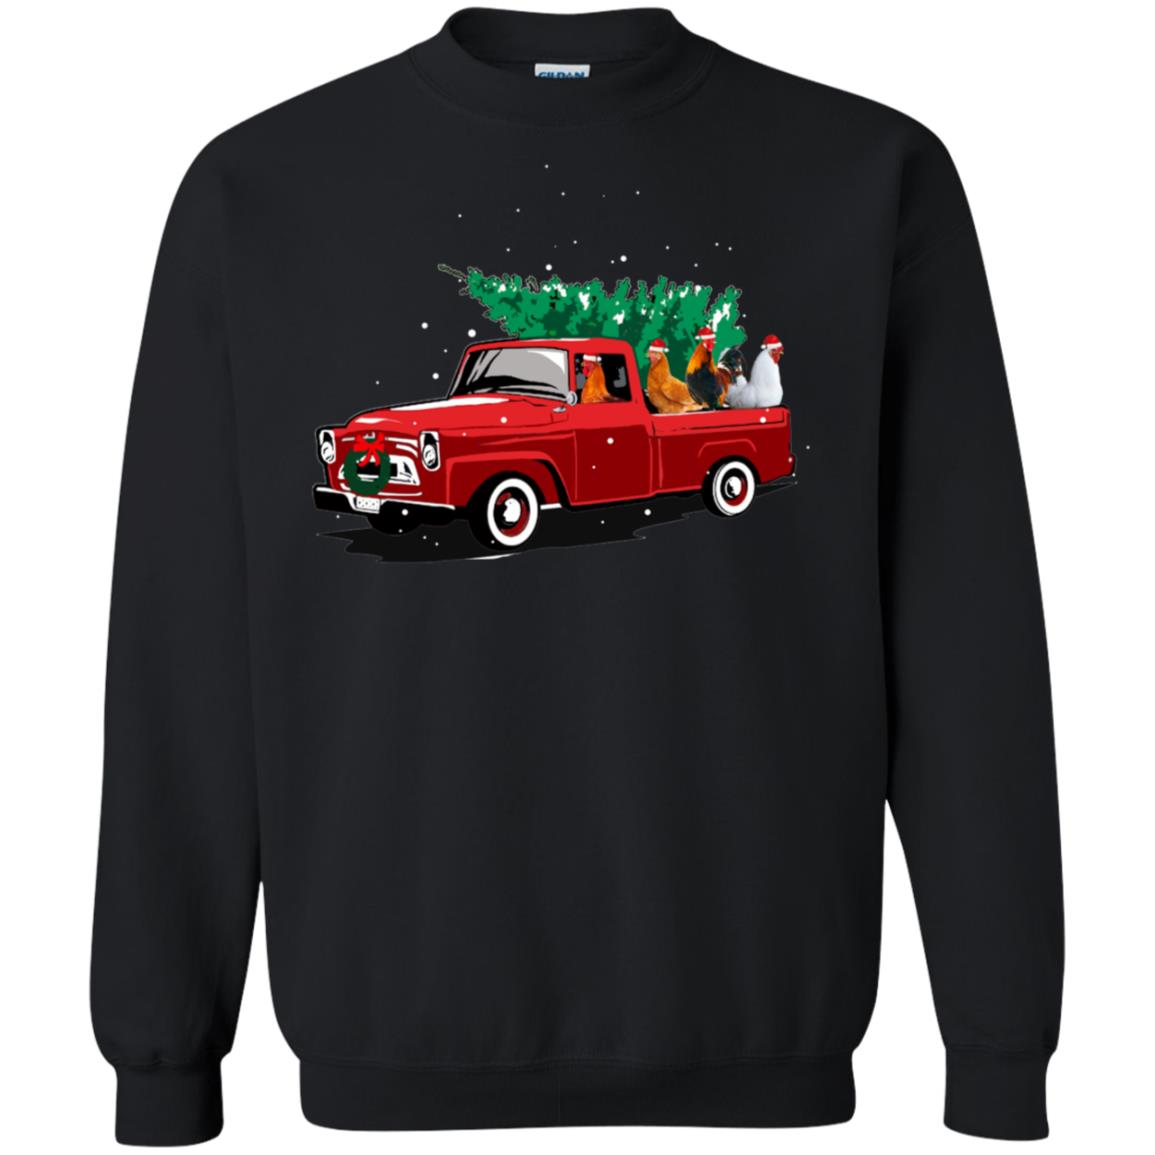 Chickens On Car Merry Christmas Gift Shirt For Mens WomensG180 Gildan Crewneck Pullover Sweatshirt 8 oz.